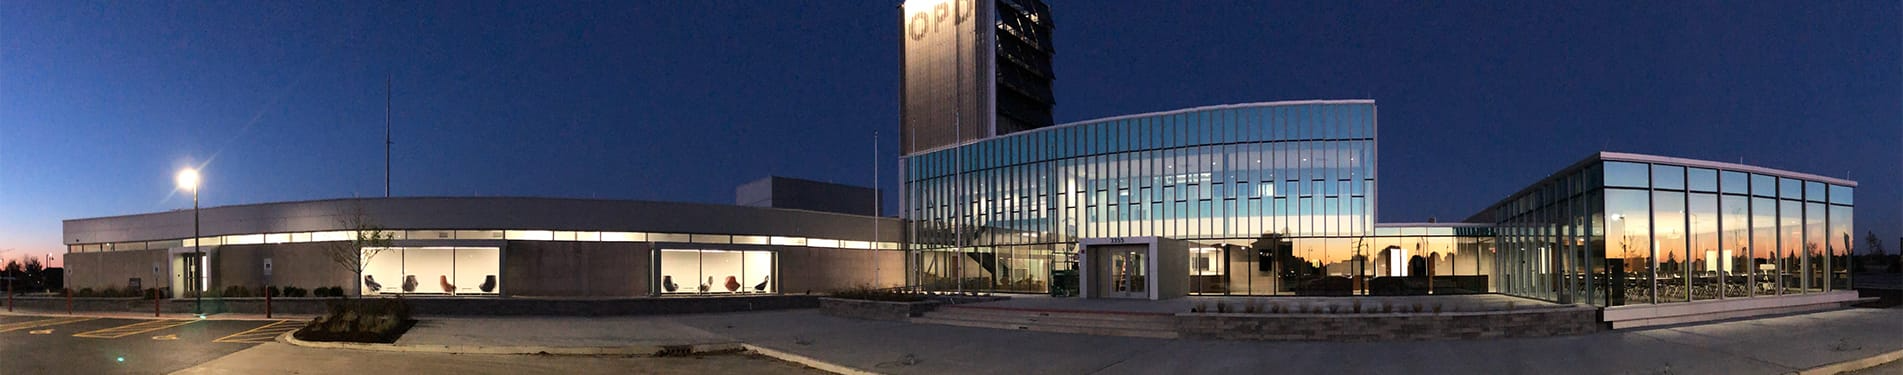 Oswego Headquarters Nighttime Panoramic